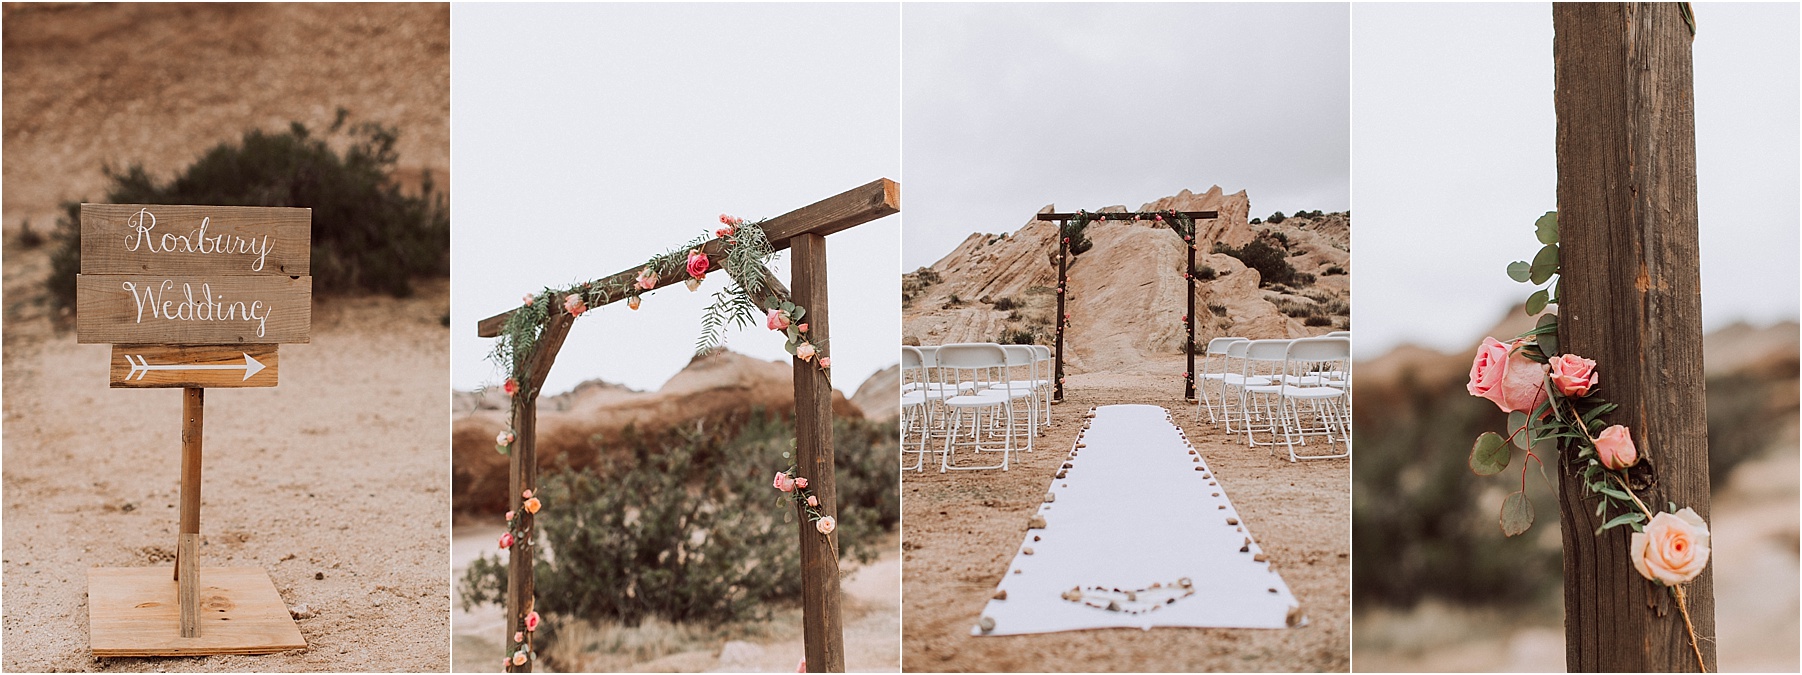 Vasquez Rocks Intimate Wedding & Elopement Photography - Ceremony Details